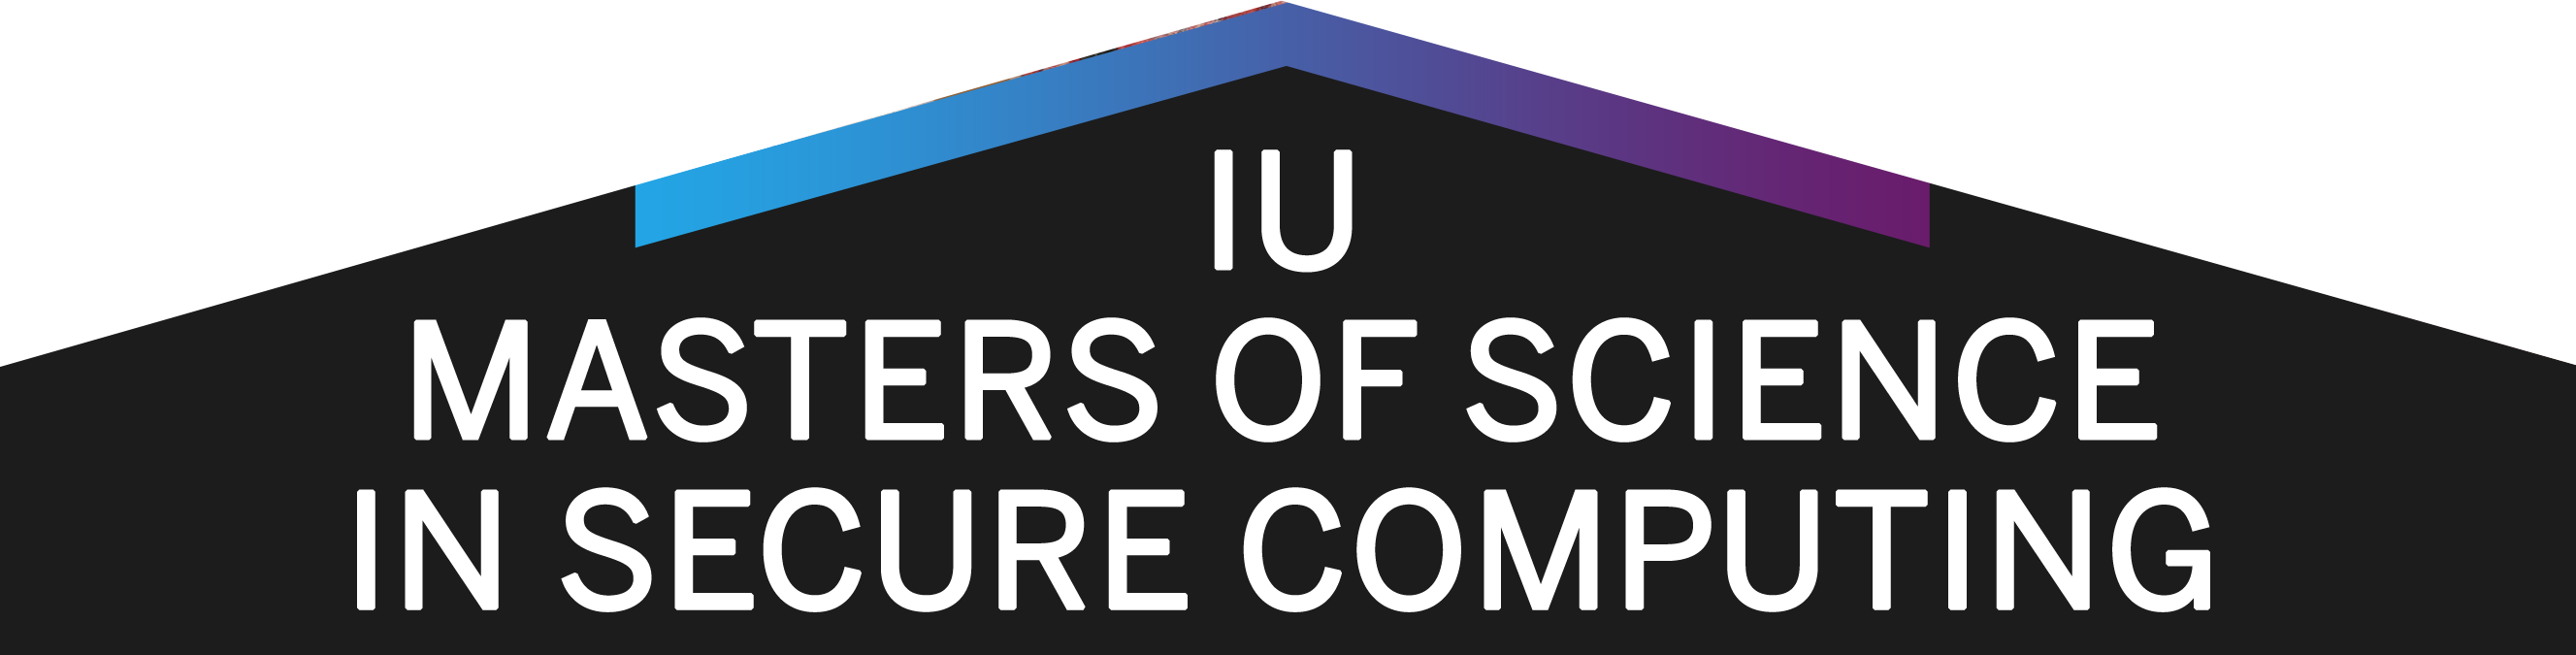 IU Masters of Science in Secure Computing Logo